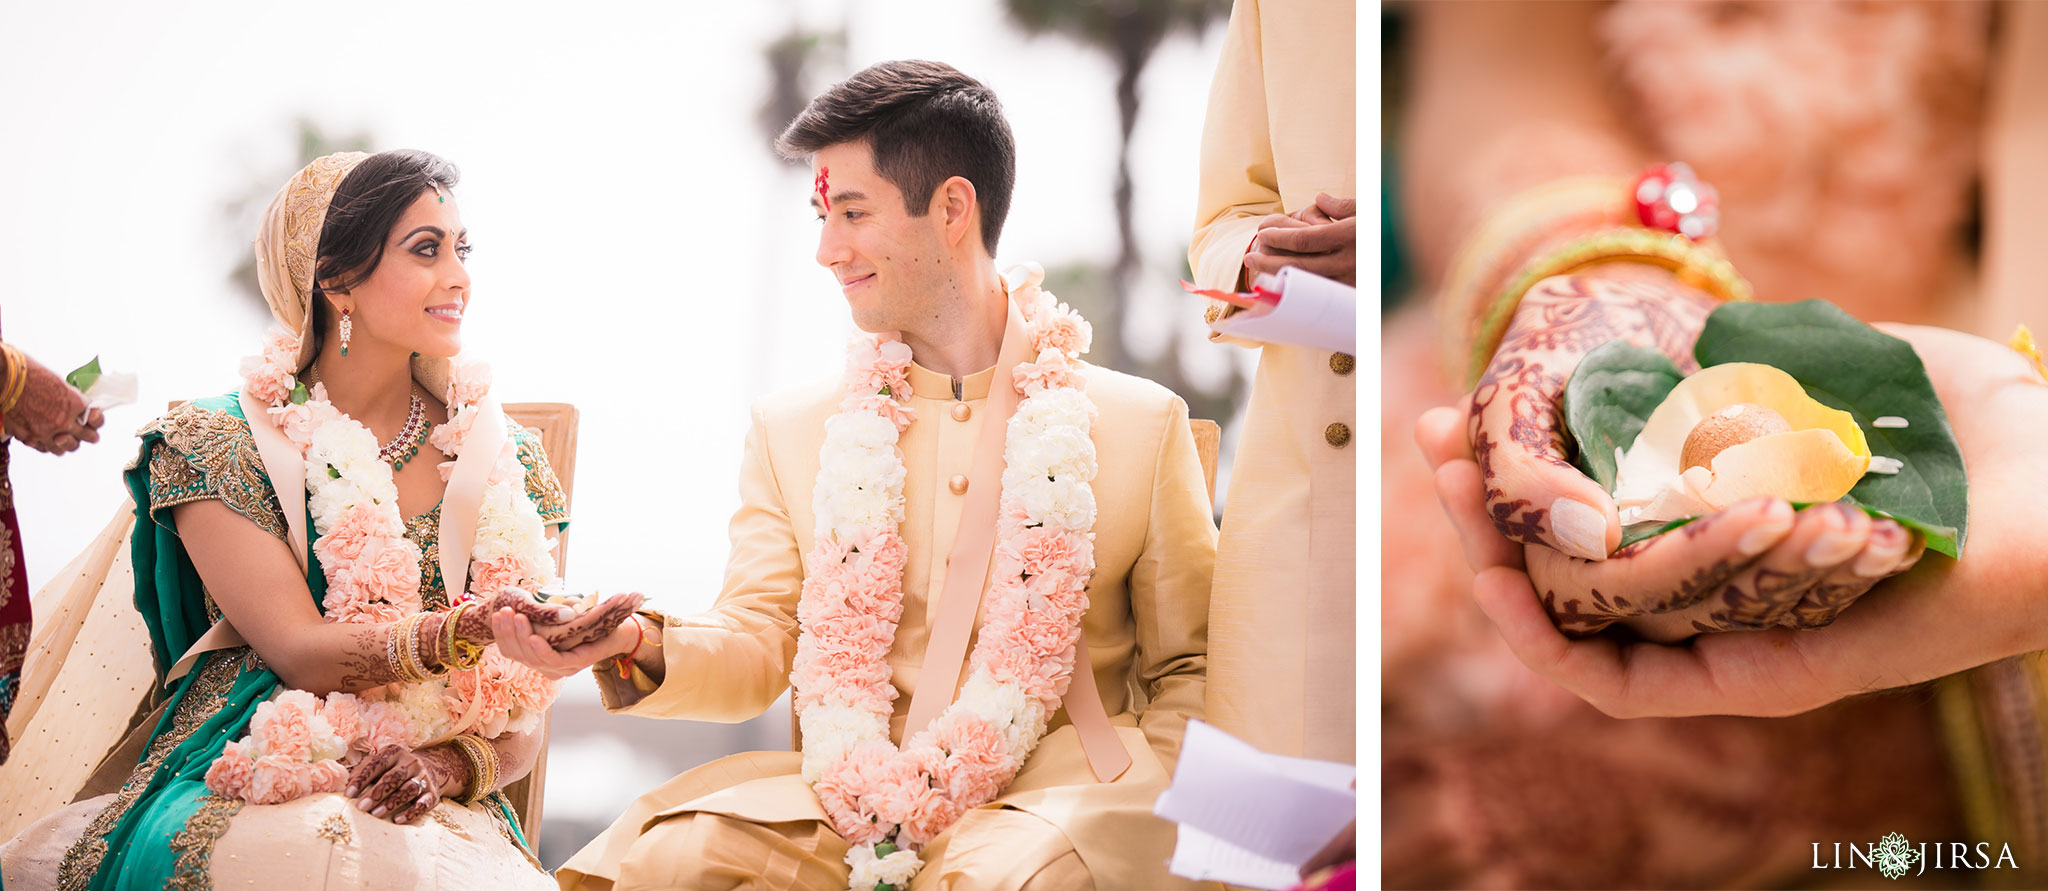 29 pasea hotel and spa huntington beach indian wedding ceremony photography